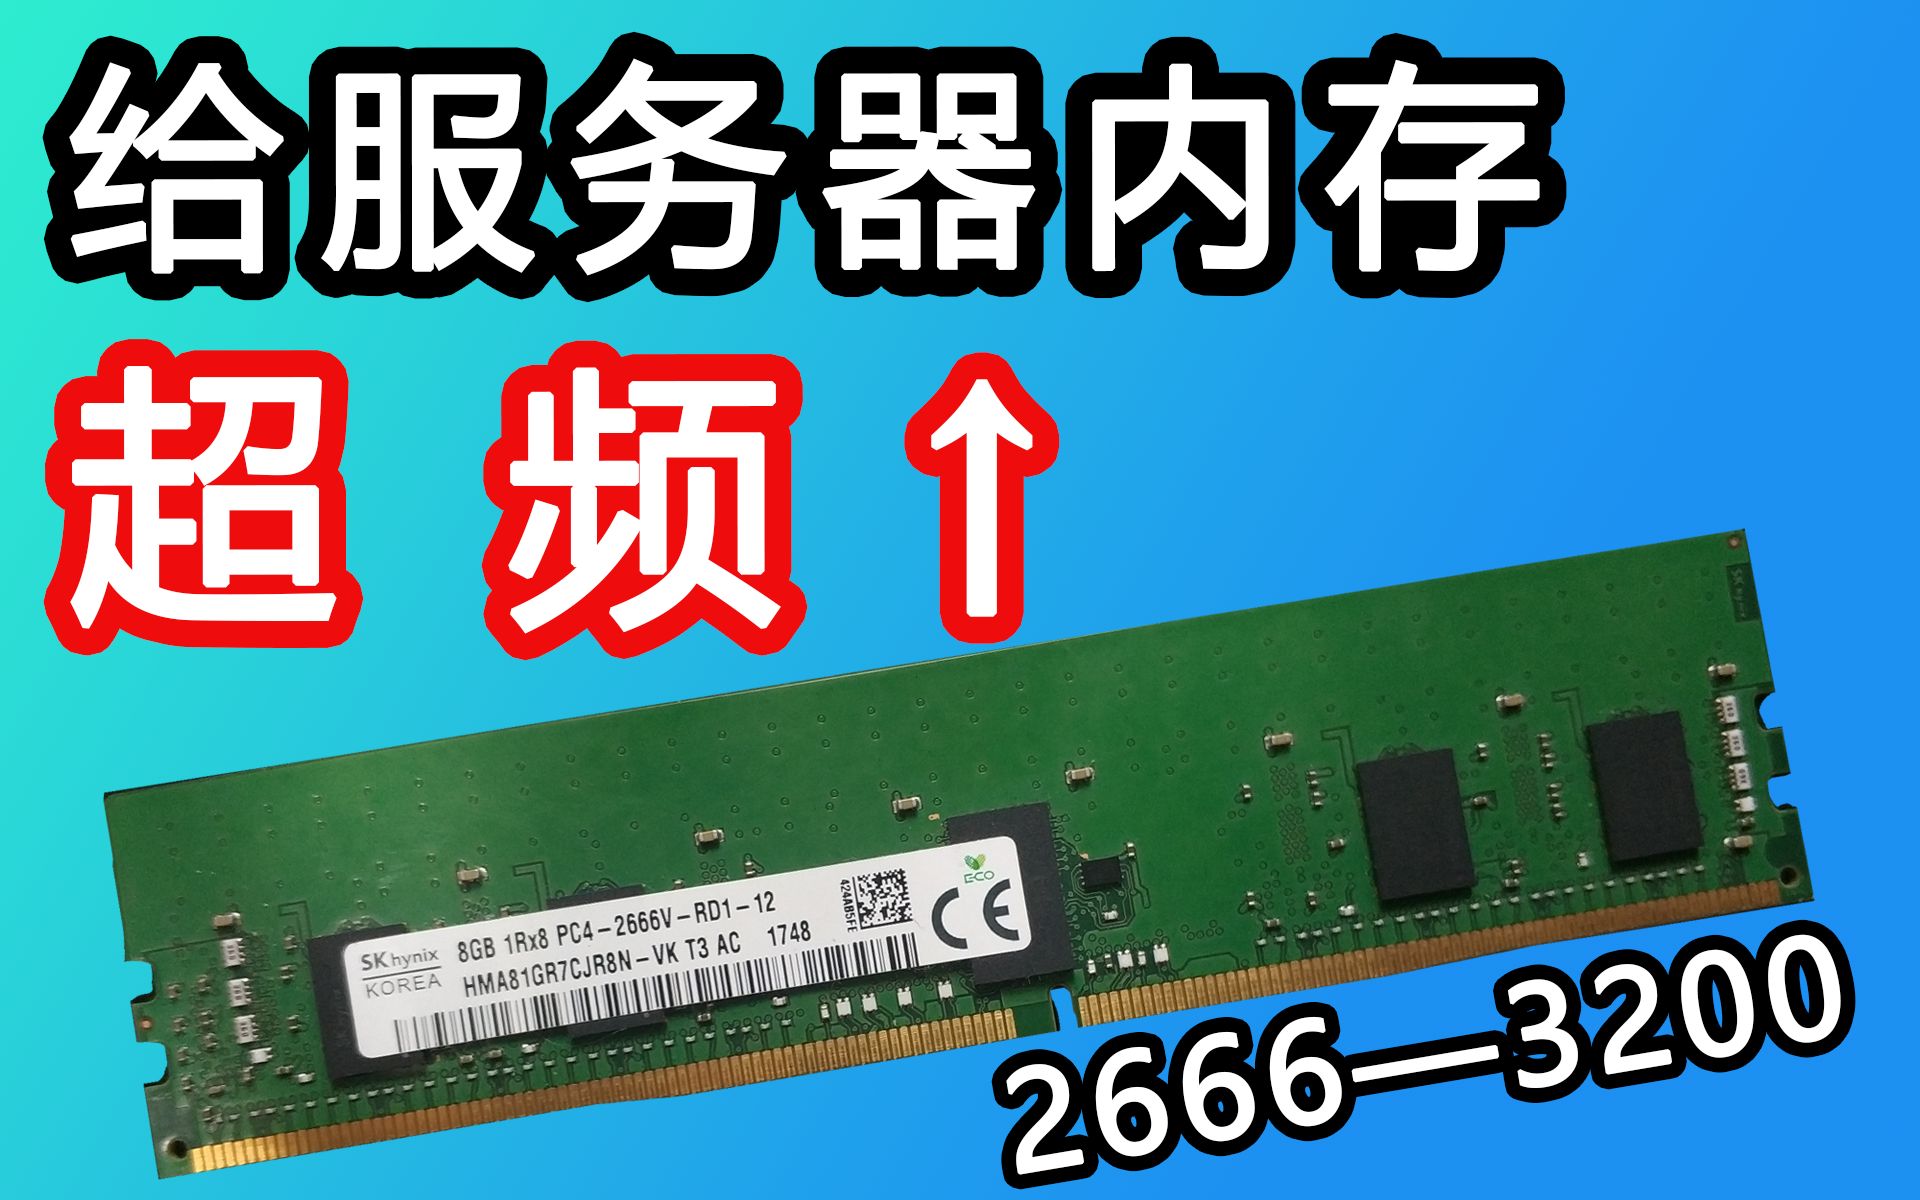 胜创ddr2 800mhz 内存革命！探秘顶尖DDR2 800MHz，为何备受瞩目？  第2张